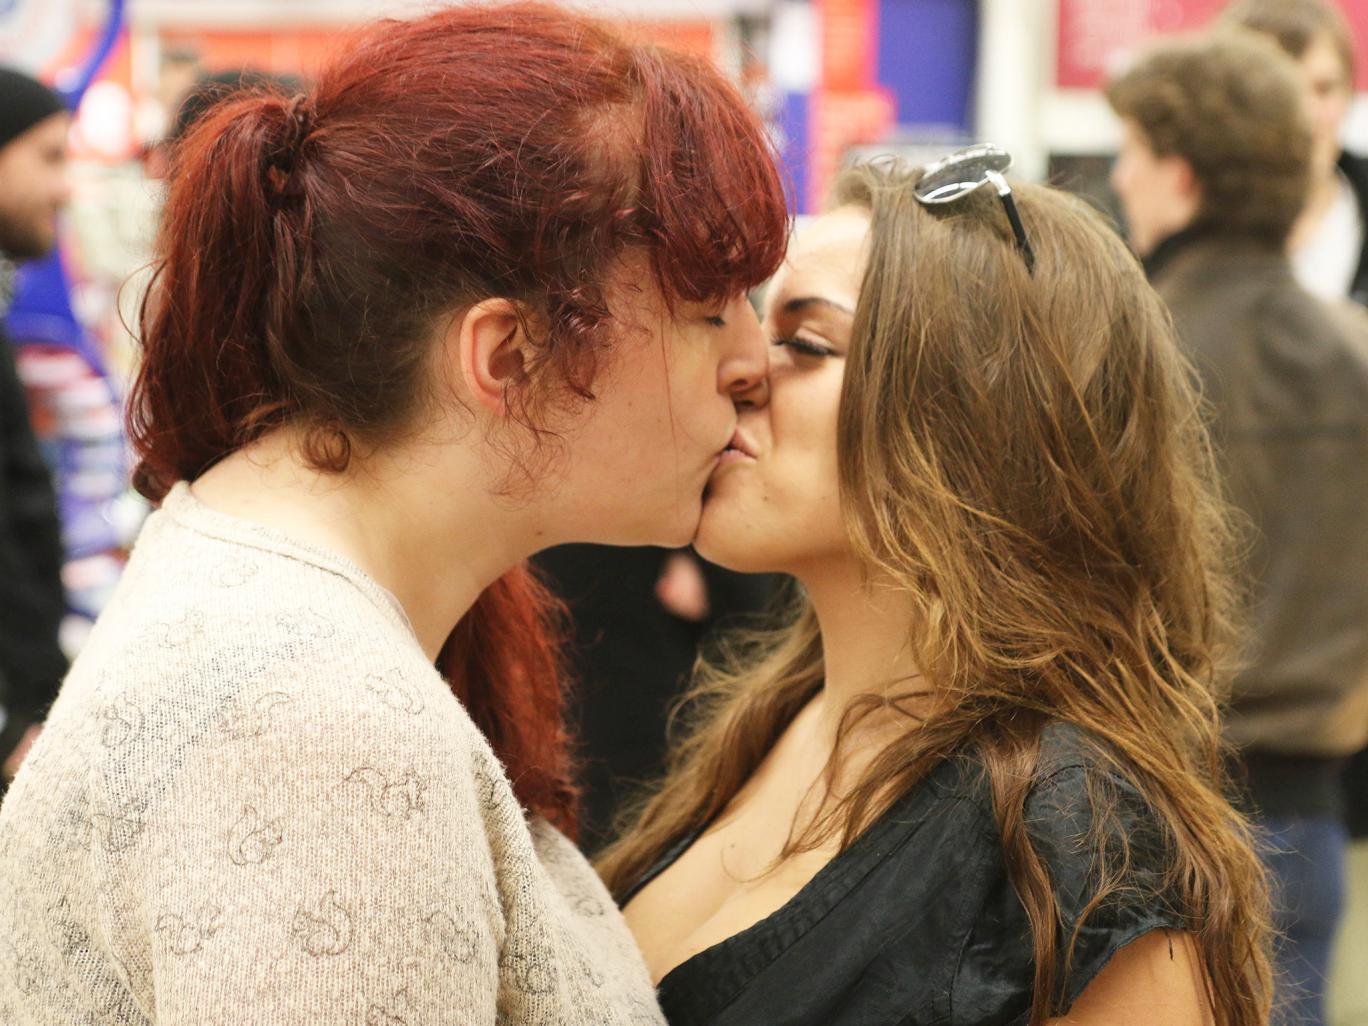 Lesbian public kissing